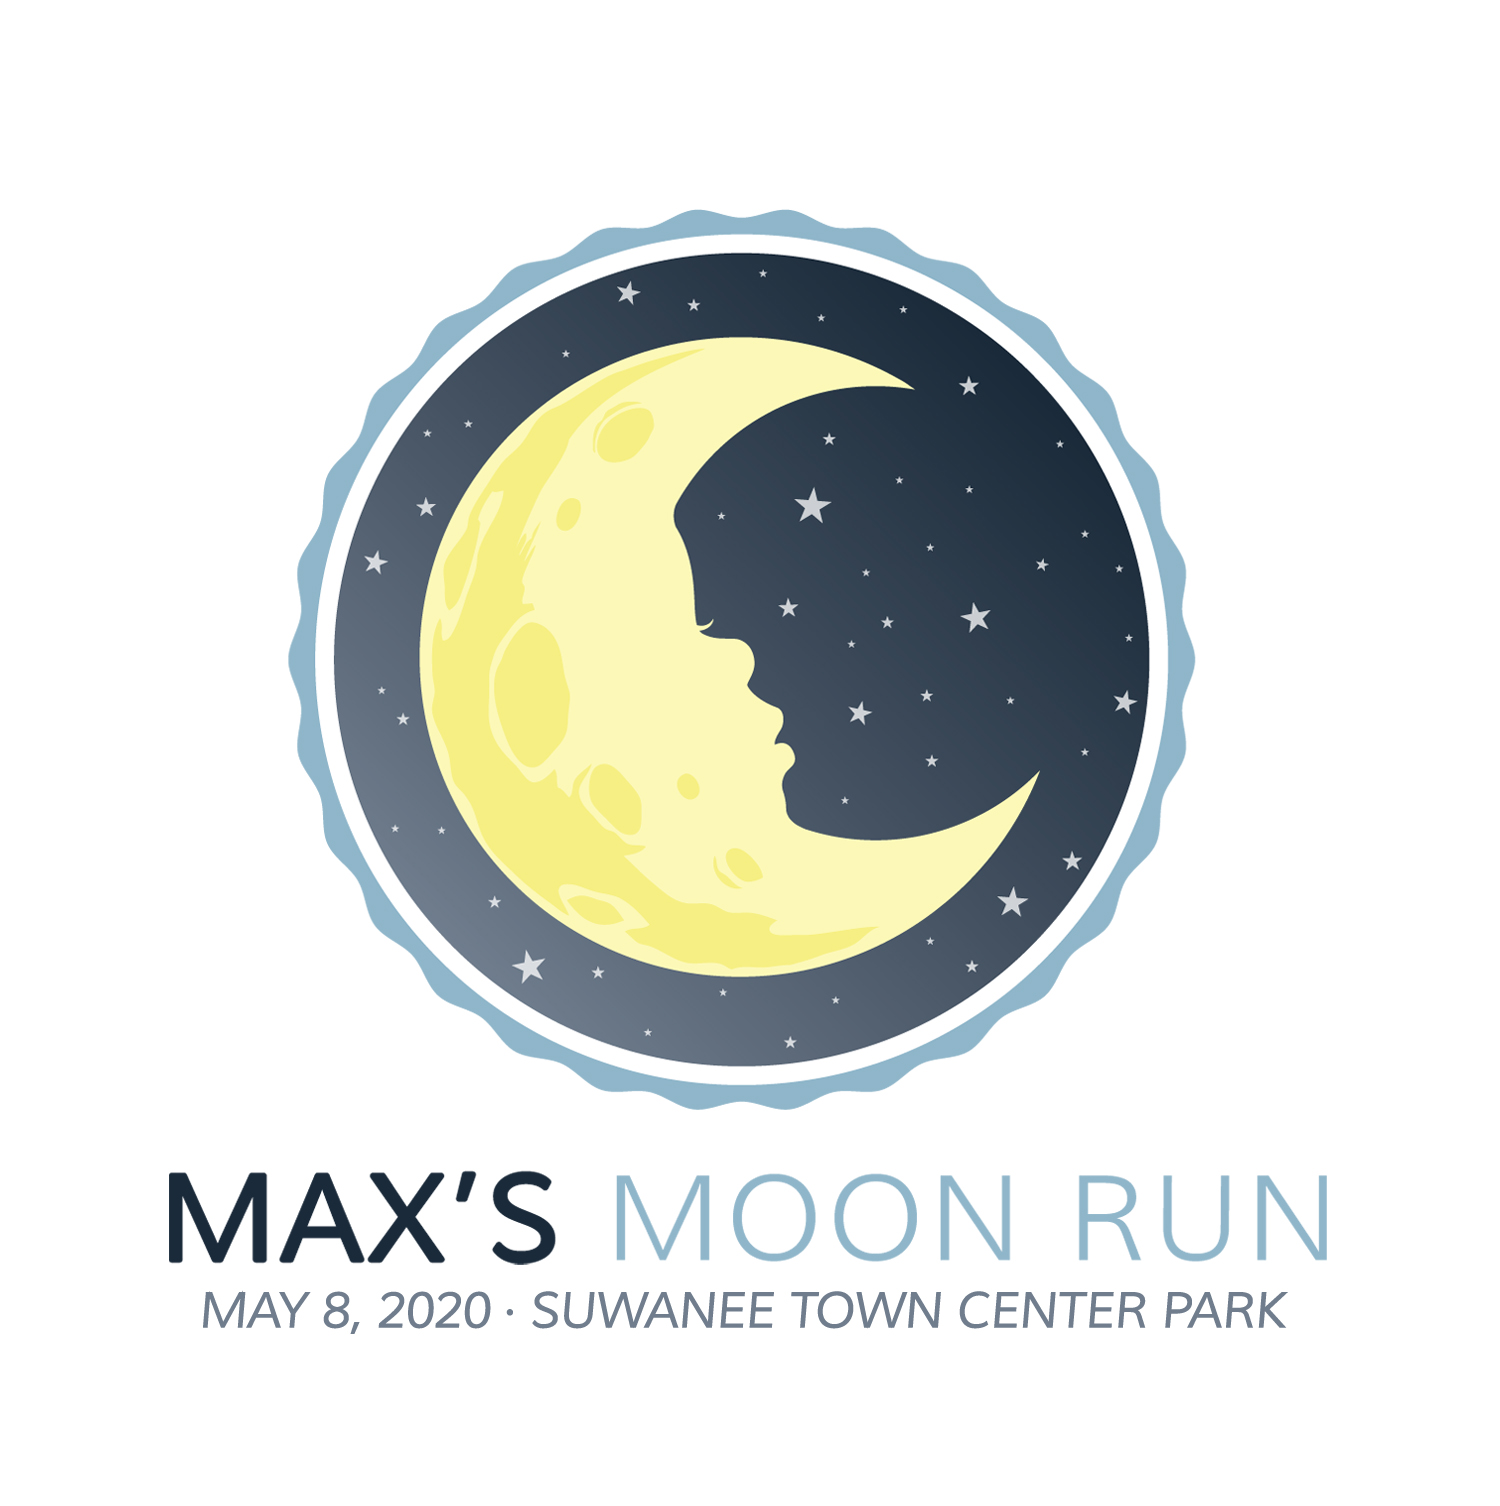 Maxs Moon Run Full Text The Northside Hospital Foundation